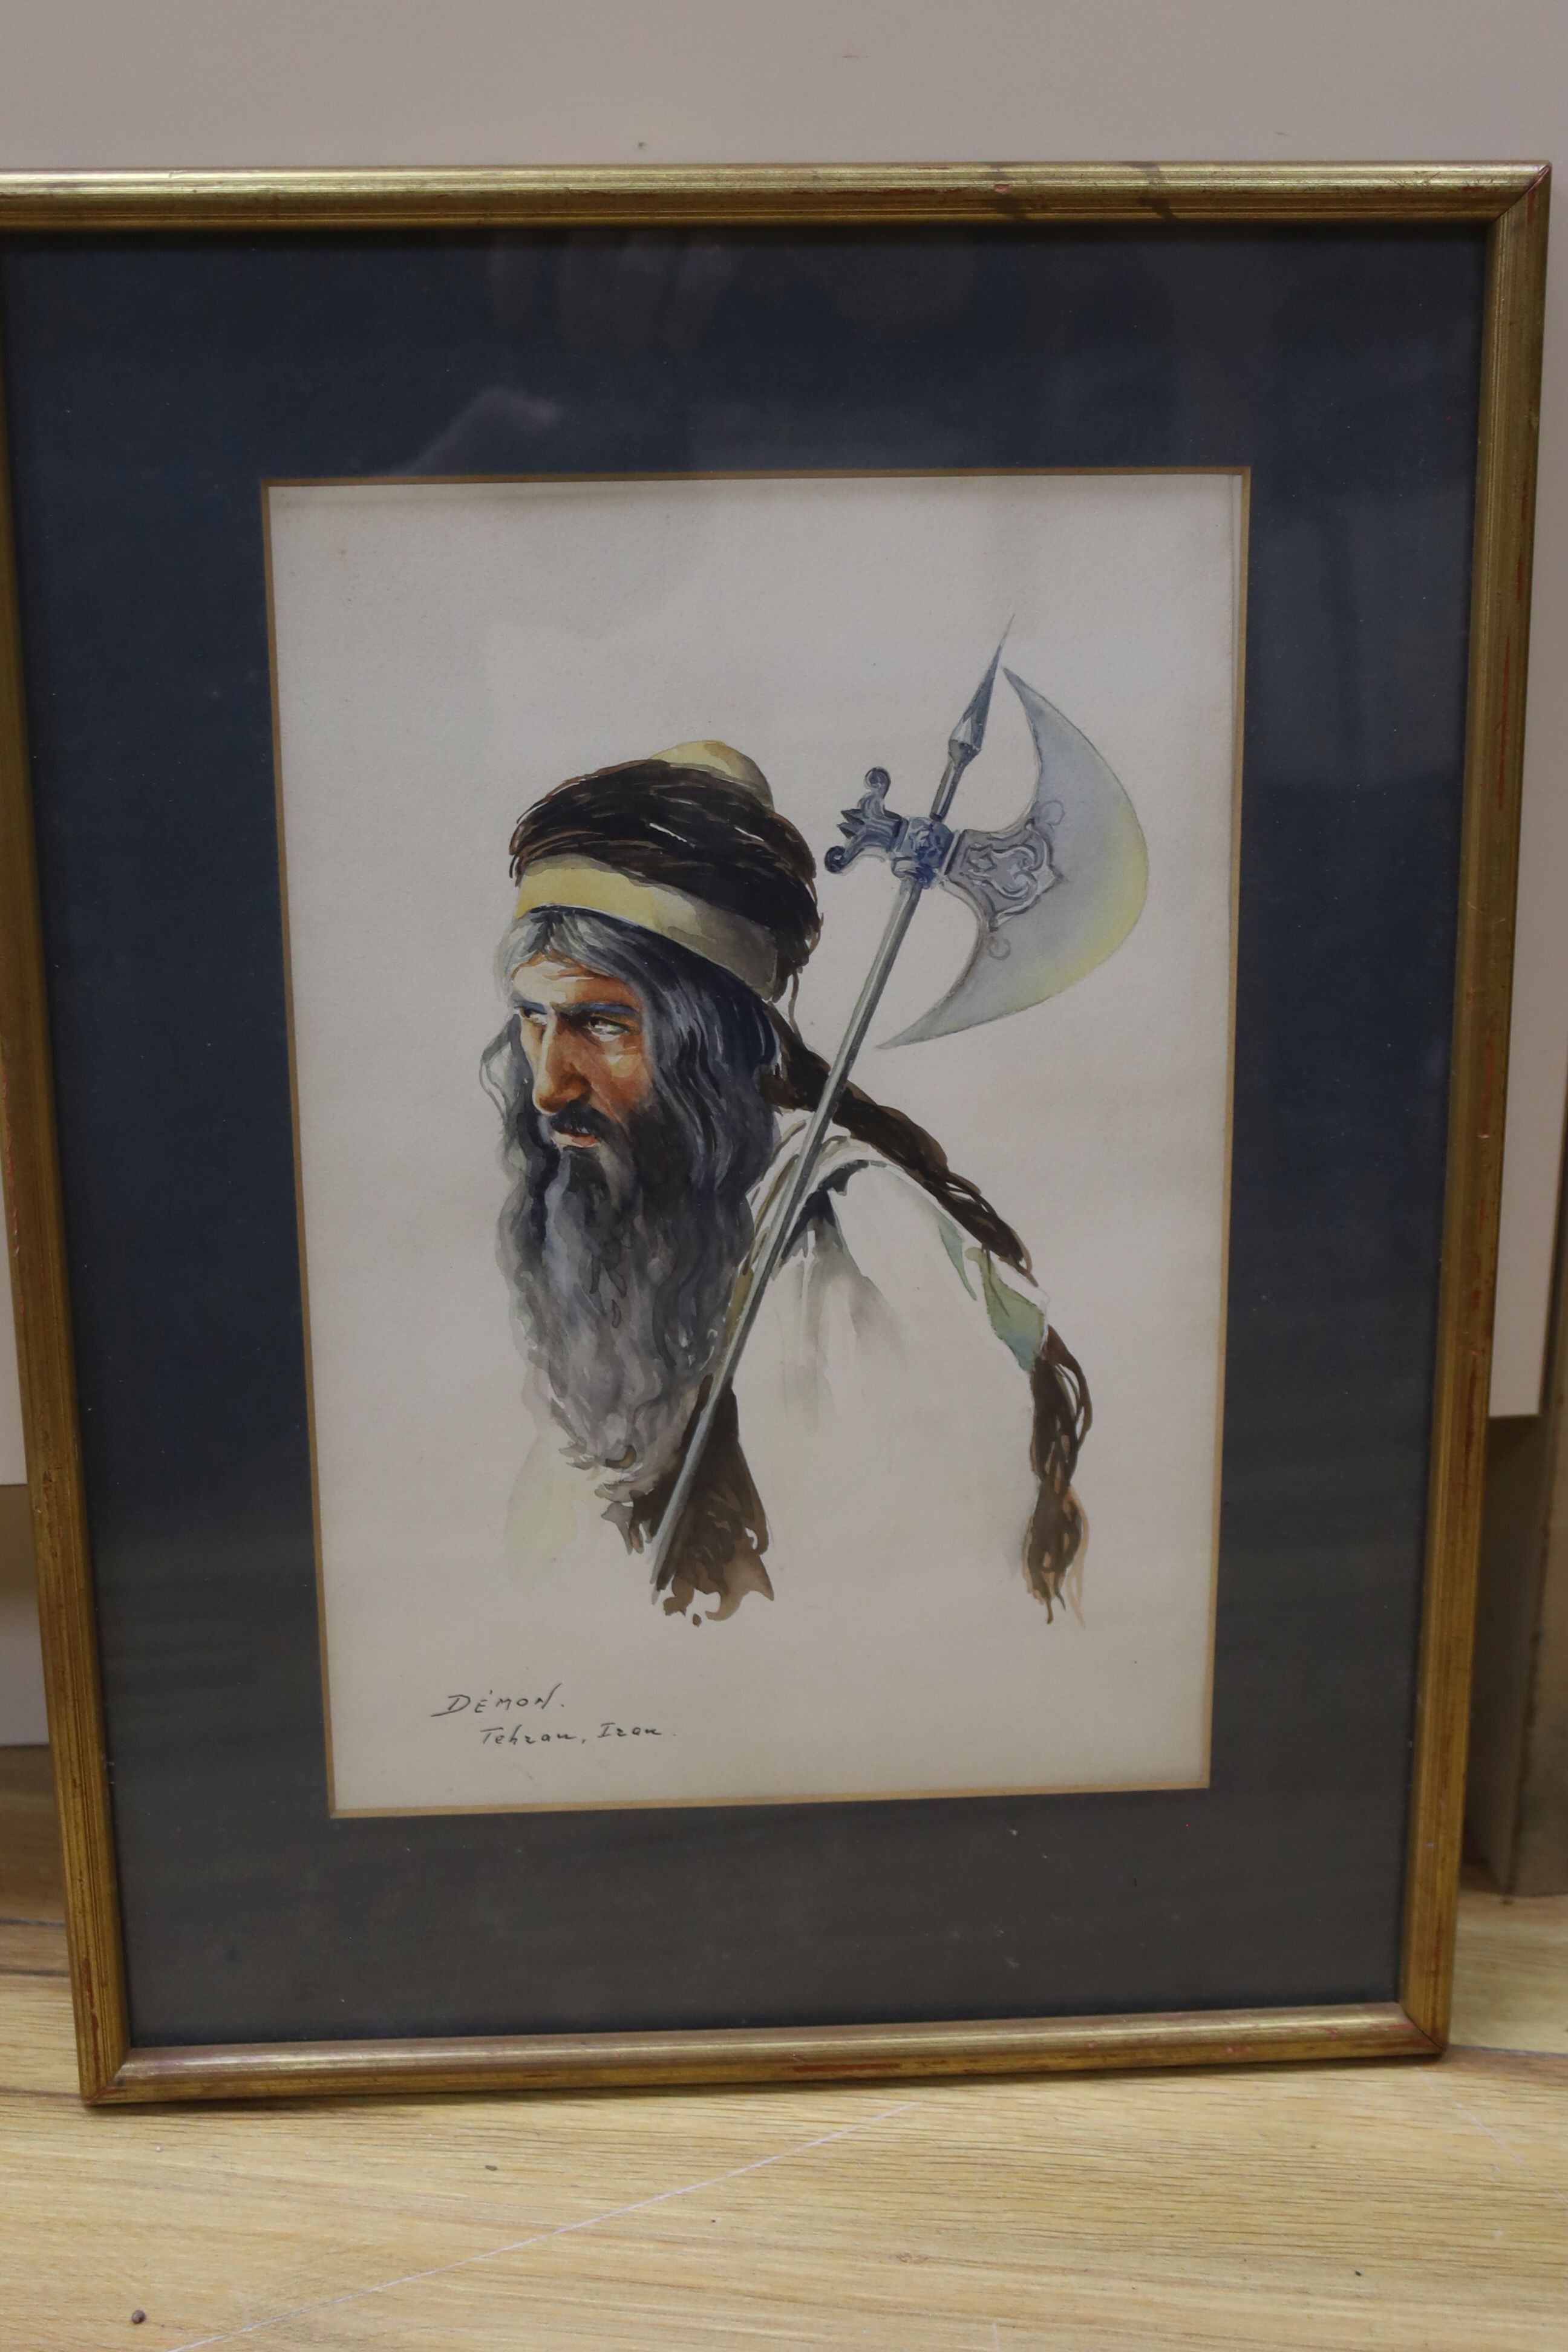 De'Mon (Iranian), watercolour, Portrait of an Iranian warrior, signed and inscribed 'Tehran, Iran', 28 x 19cm